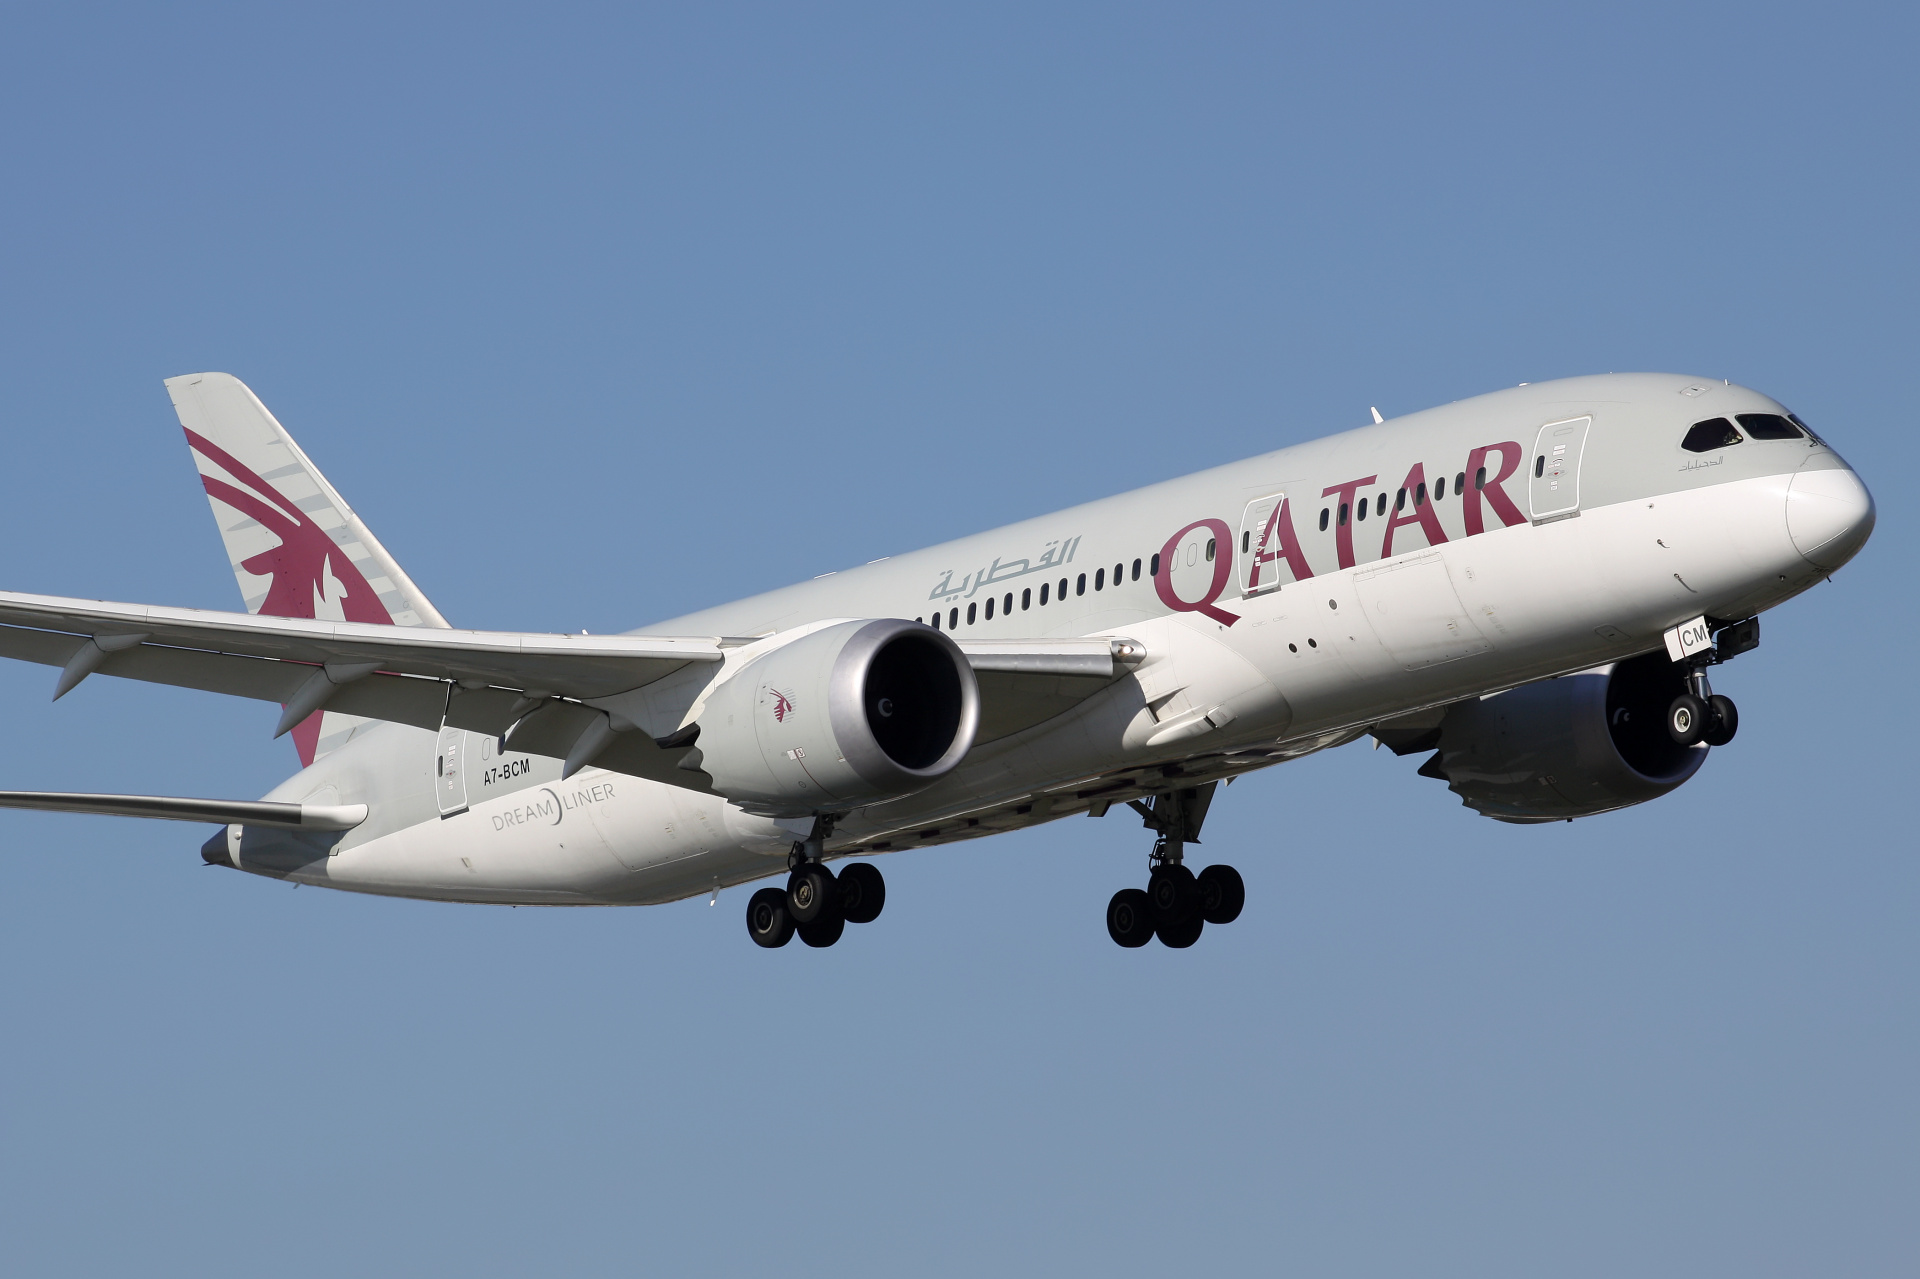 A7-BCM (Samoloty » Spotting na EPWA » Boeing 787-8 Dreamliner » Qatar Airways)